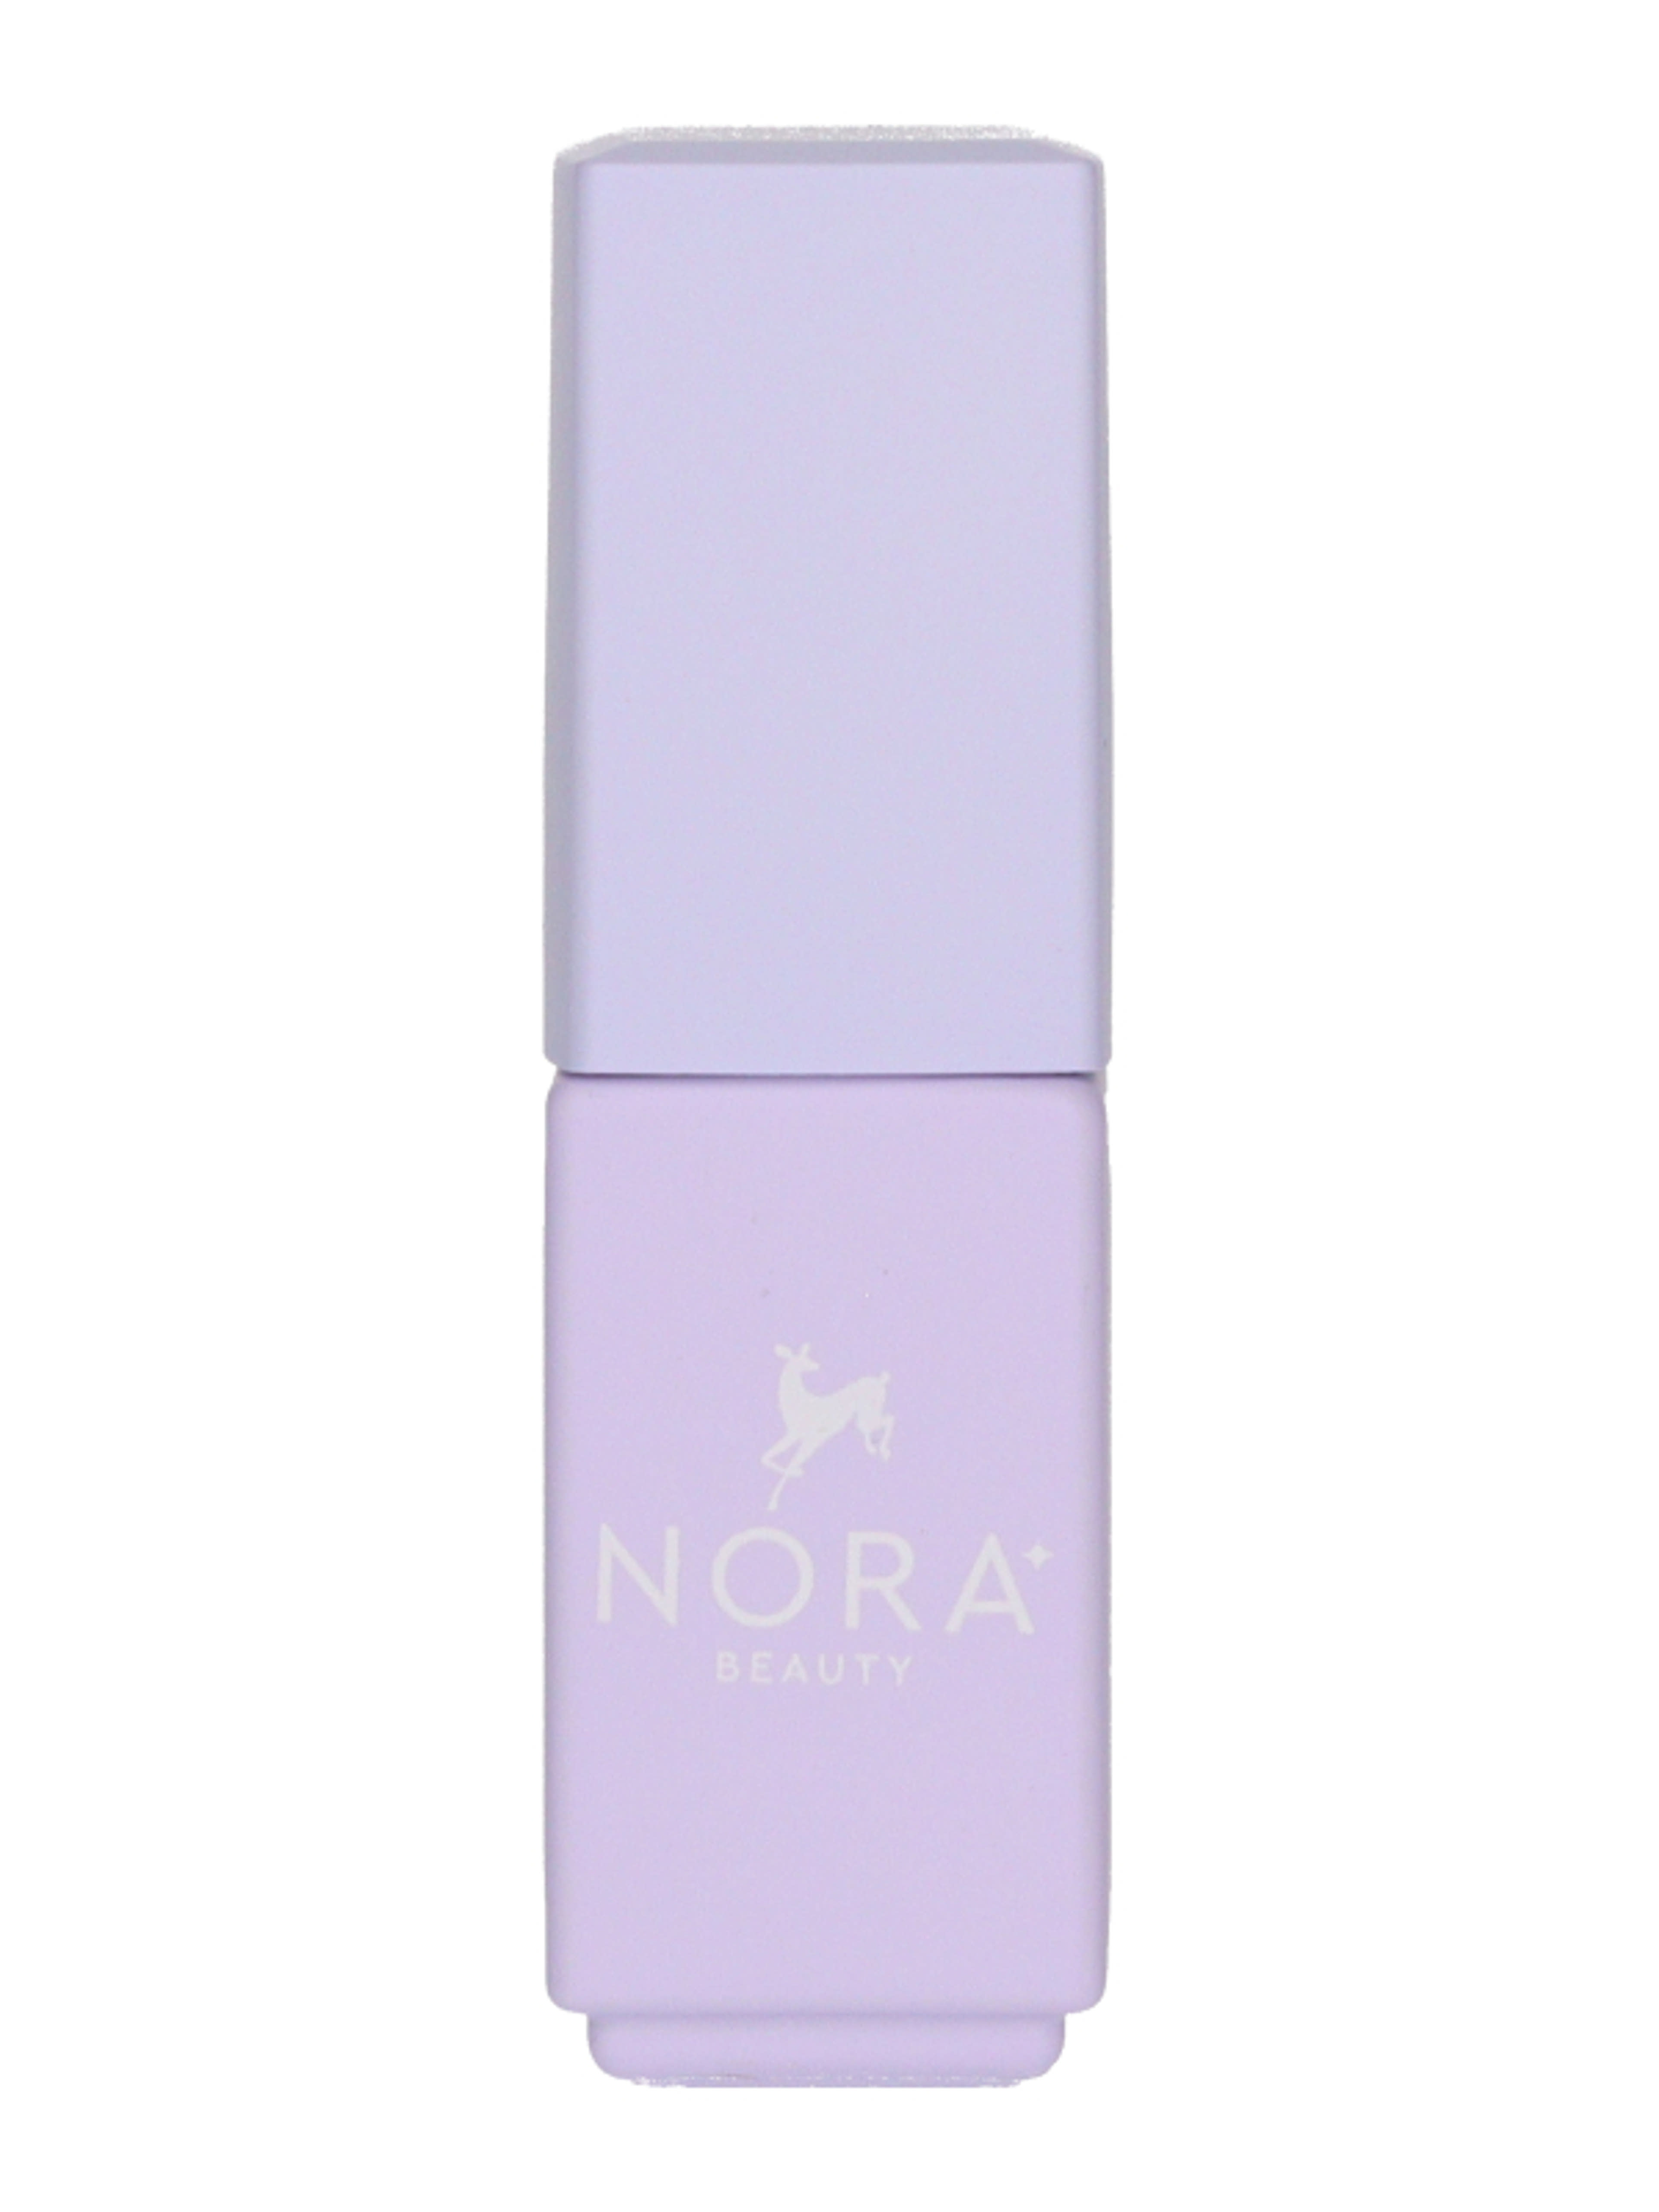 Nora Beauty UV lakkzselé /tb-03 snow white - 1 db-2